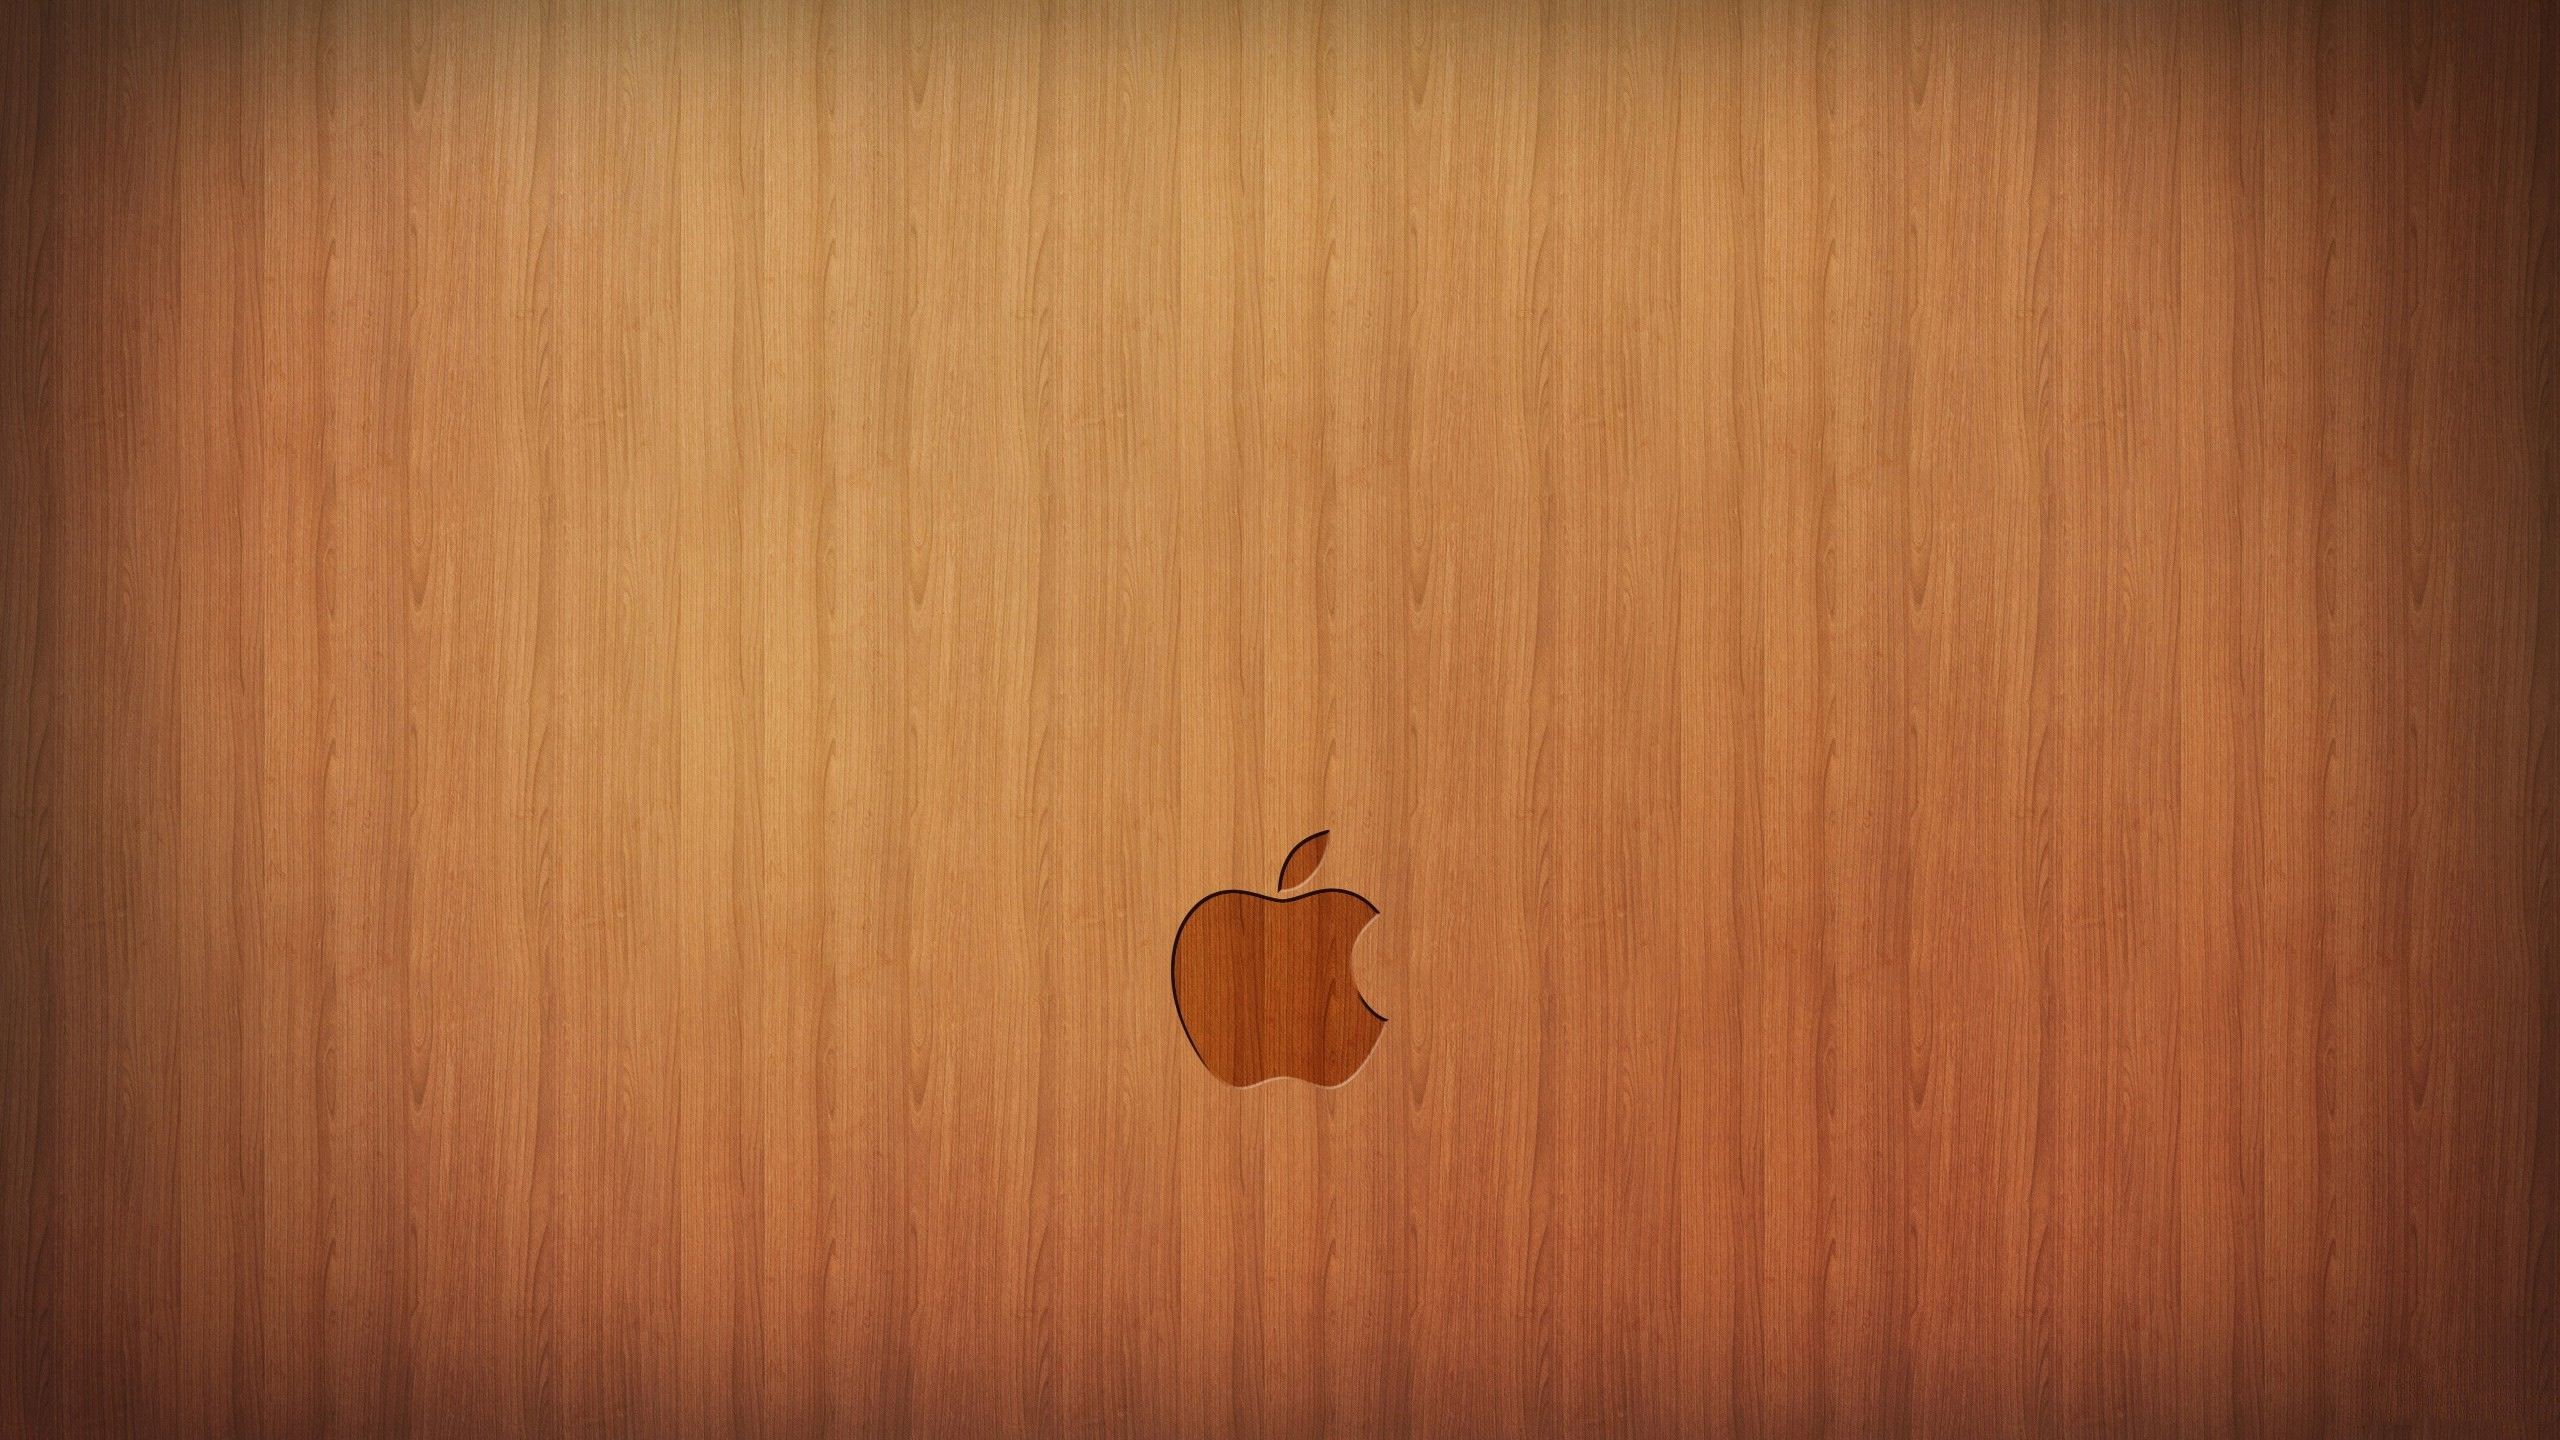 General 2560x1440 logo Apple Inc. wooden surface texture brand